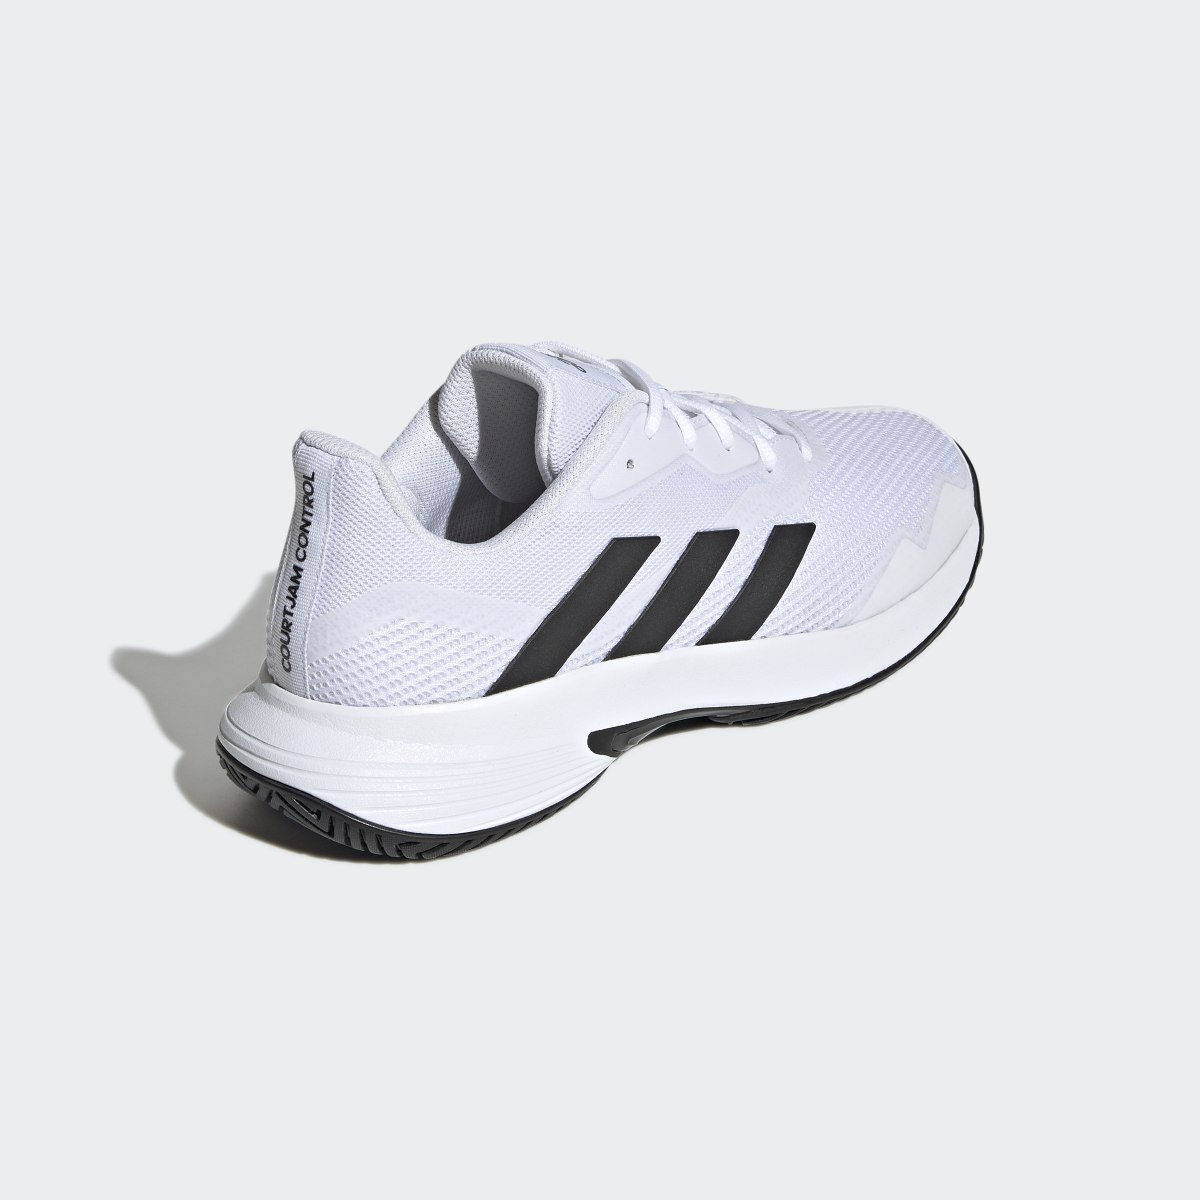 Adidas Courtjam Control Tennis Shoes. 9